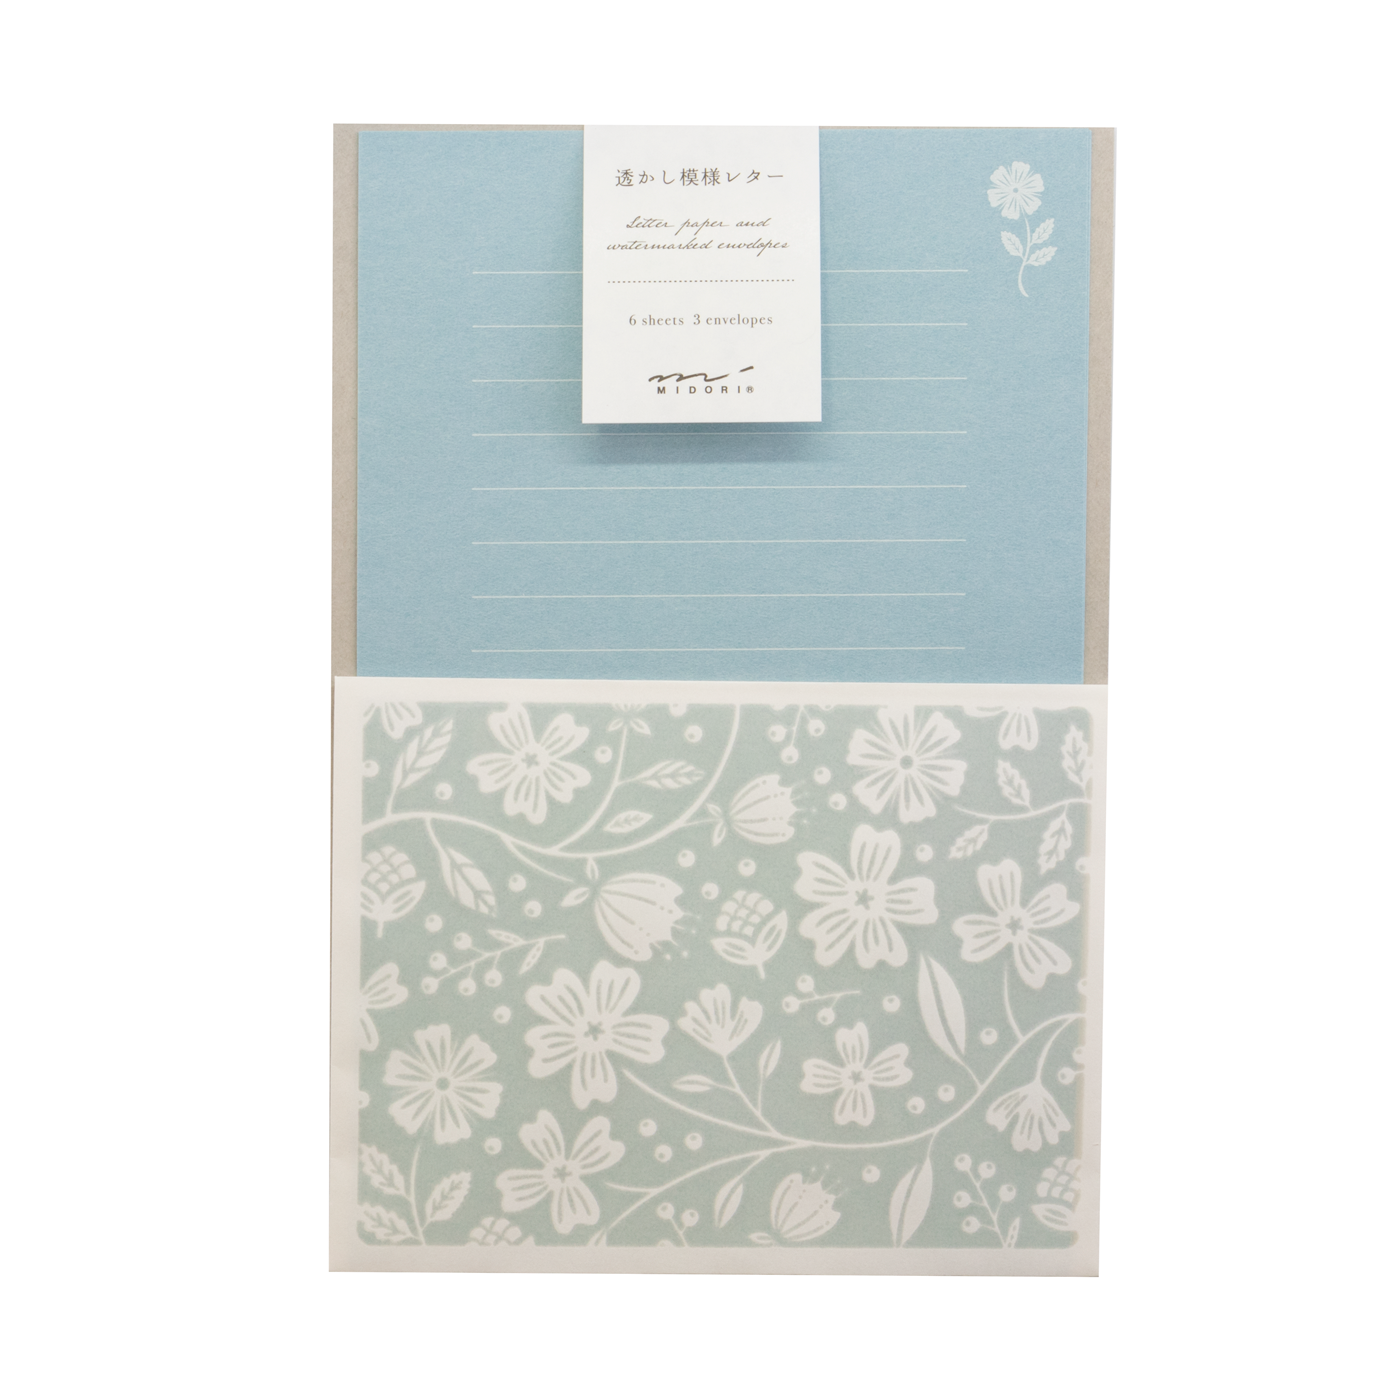 Midori Letter Set 500 - Watermark Flower Light Blue